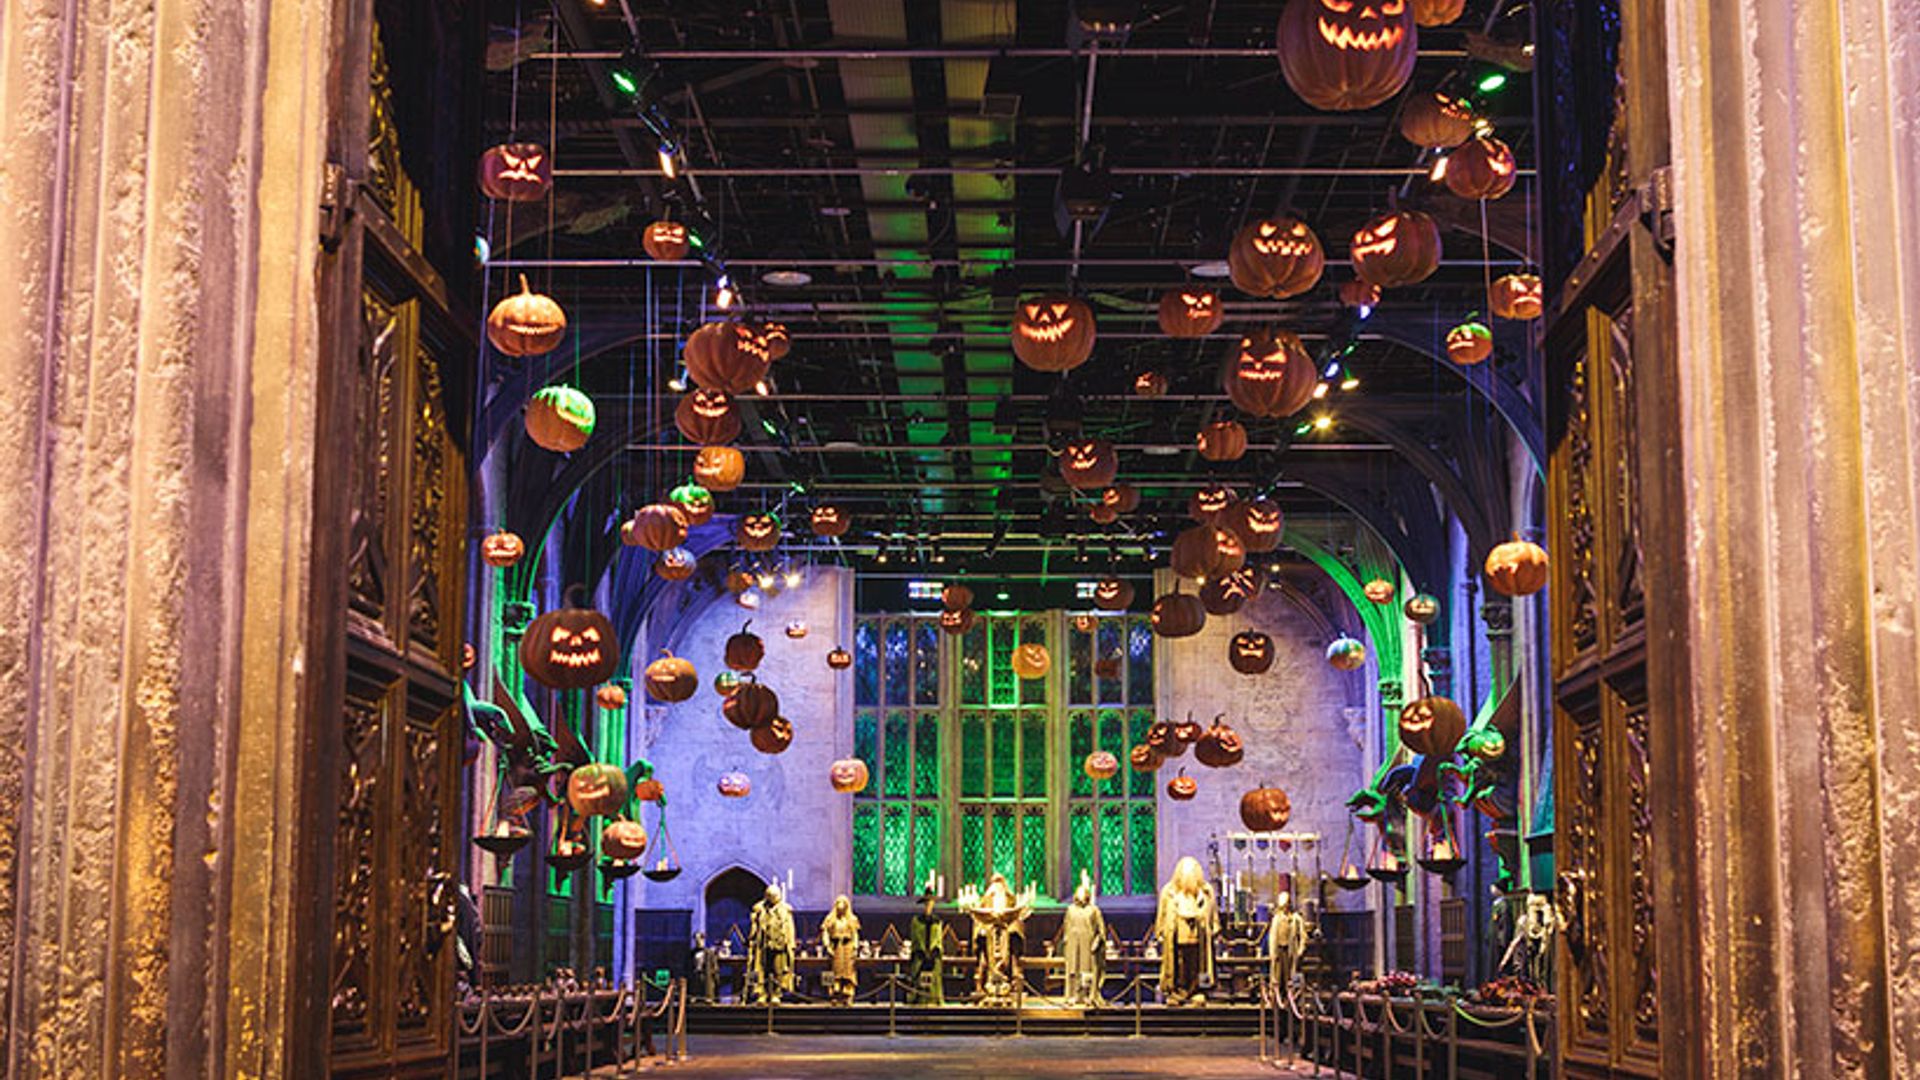 Harry Potter fans can enjoy a Halloween feast in the Hogwart Great Hall ...